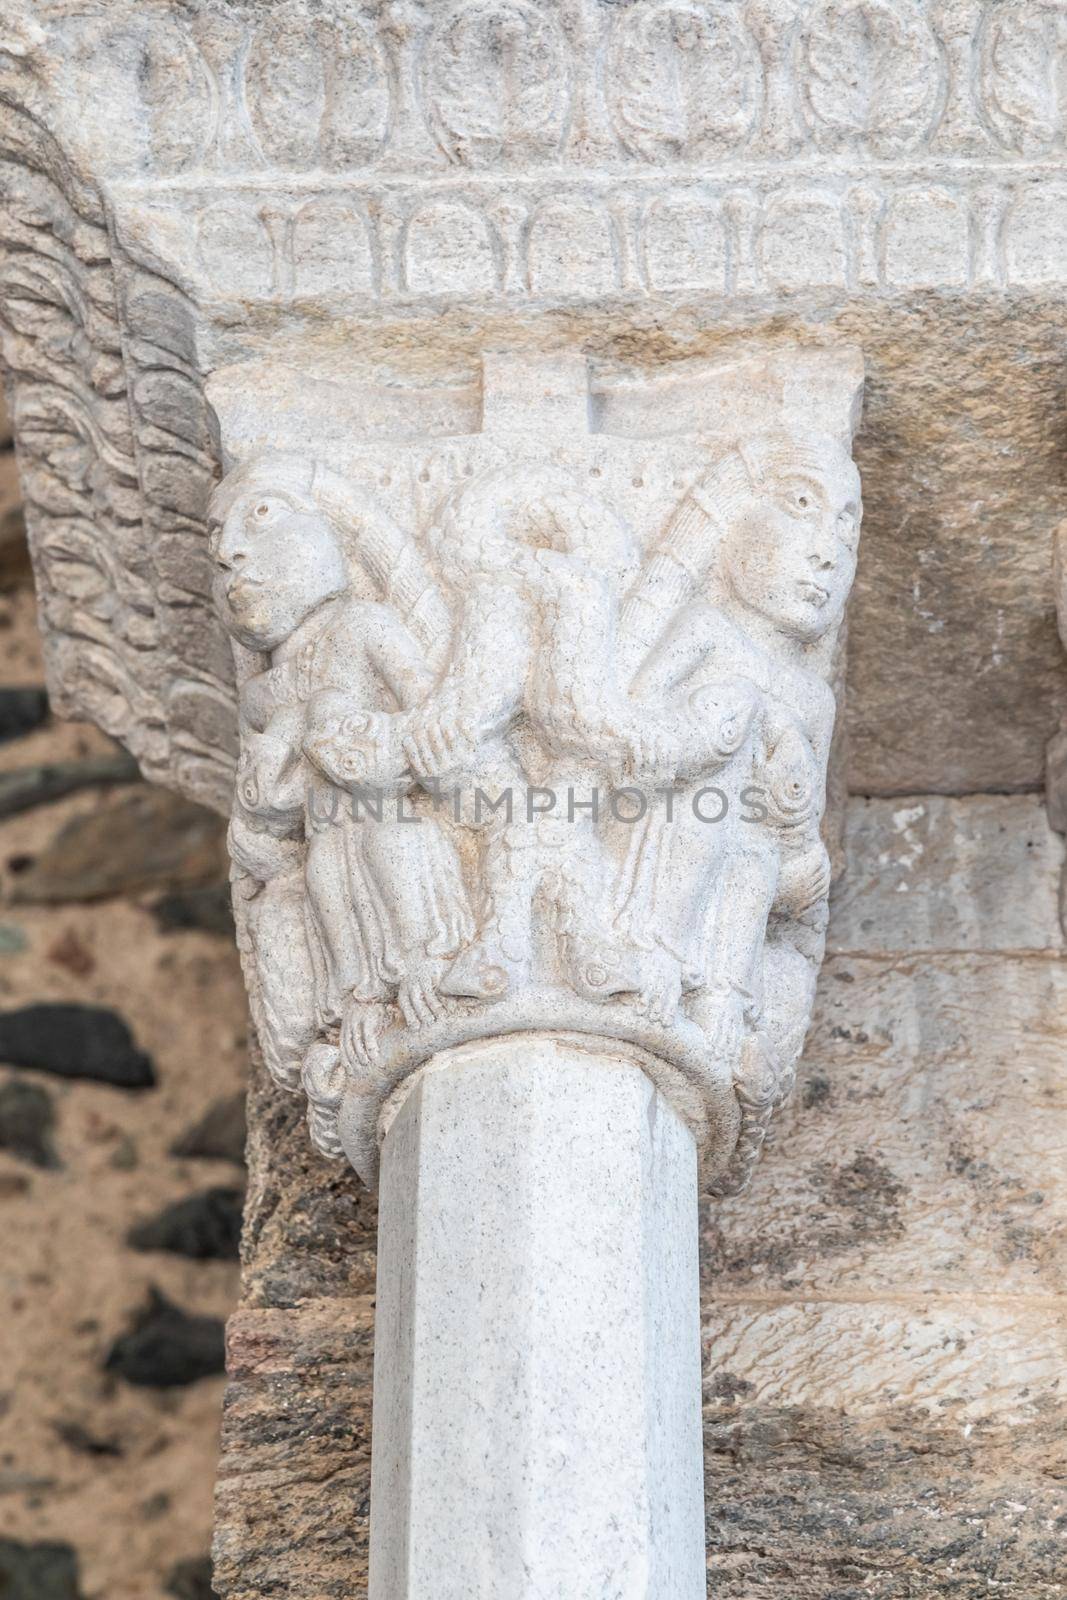 St Michael Abbey - Sacra di San Michele - Italy. Gargoyle monster sculpture, 11th Century